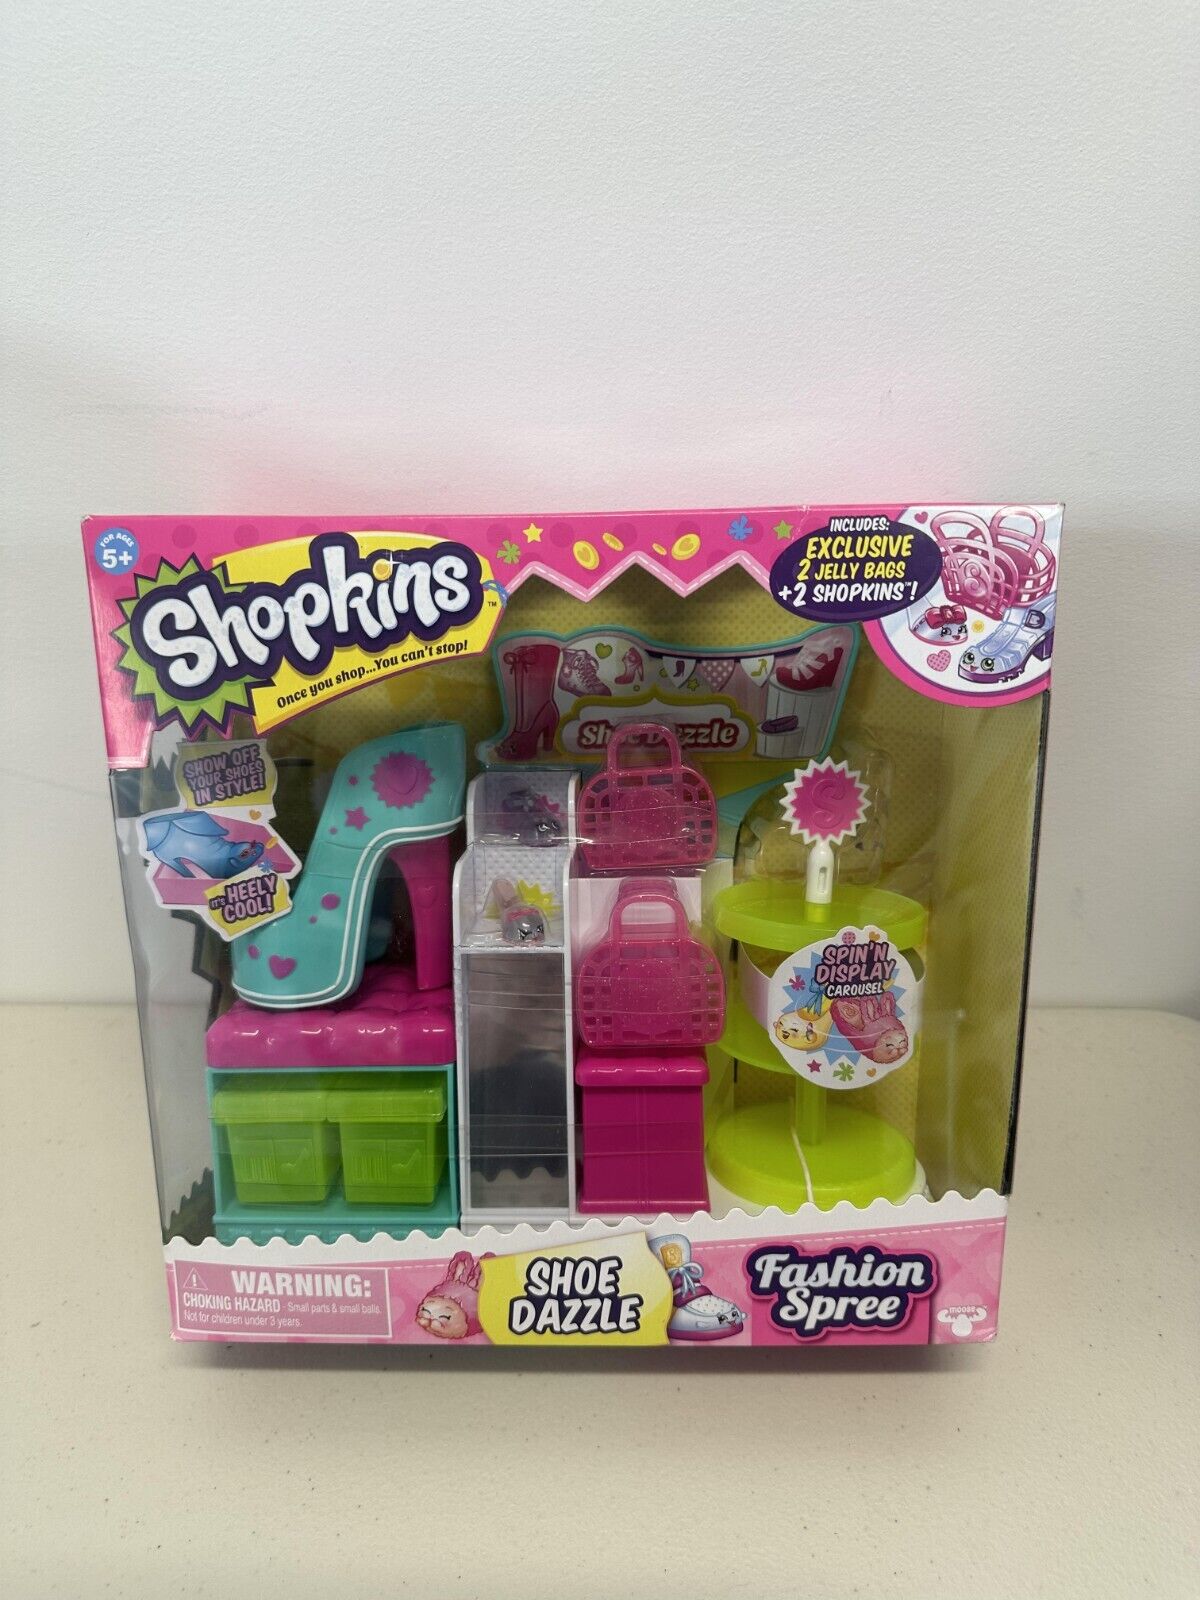 Shopkins Fashion Spree - Shoe Dazzle Toy Set - NEW IN BOX Slightly Damaged Box